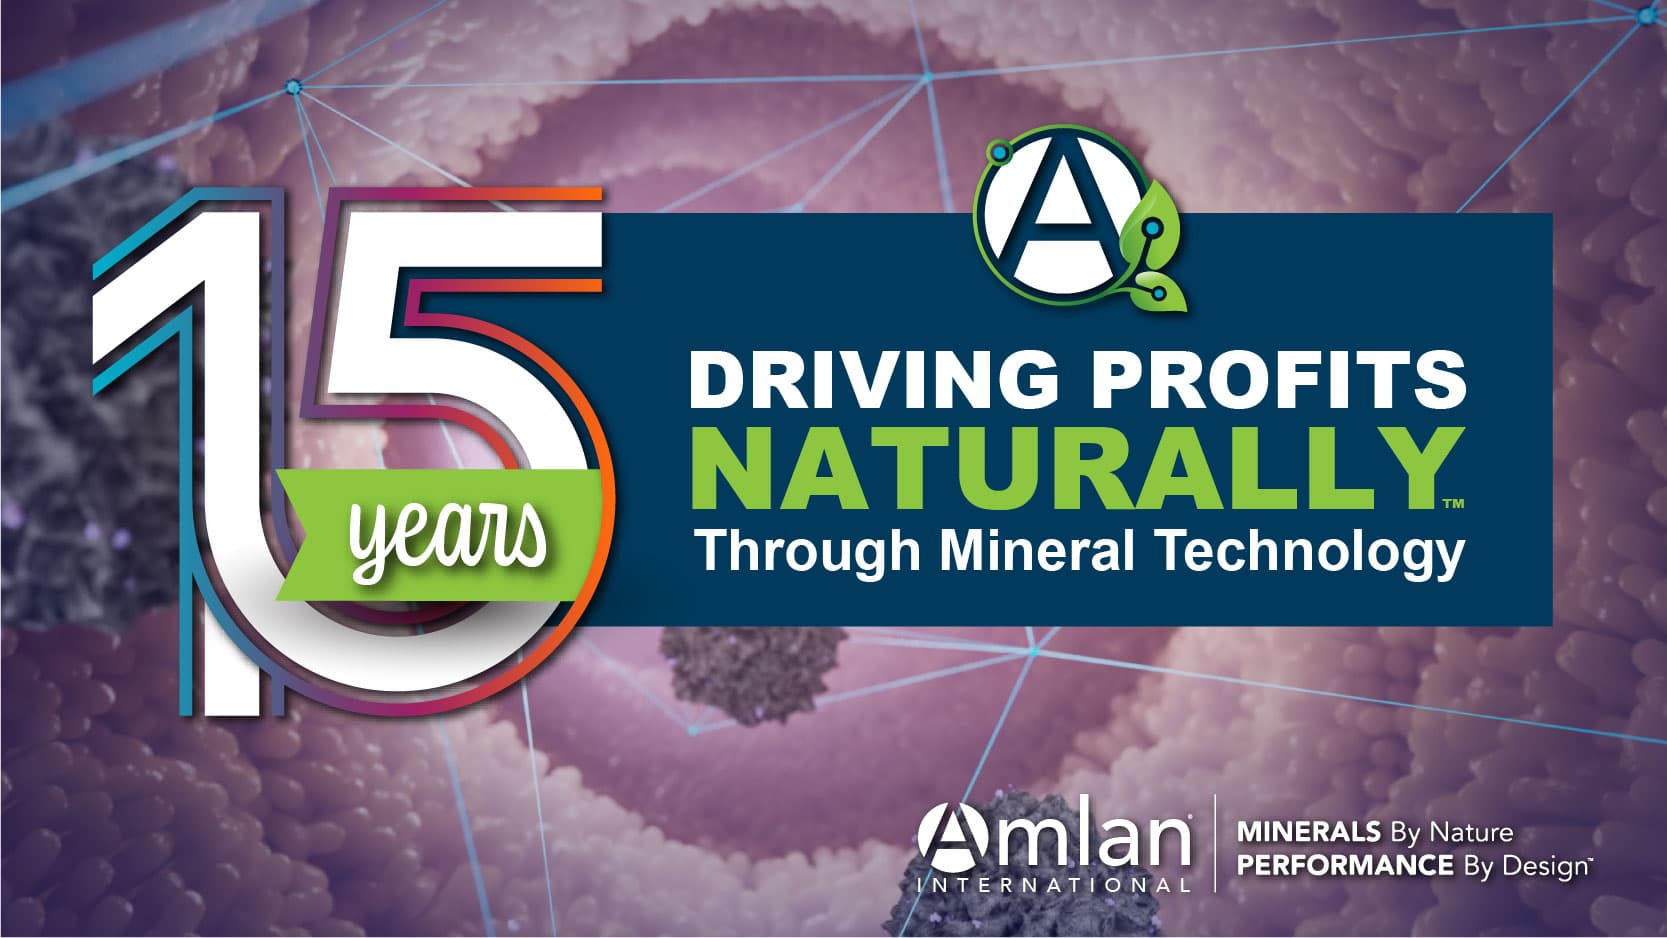 15 anos a conduzir os lucros naturalmente através da tecnologia mineral.